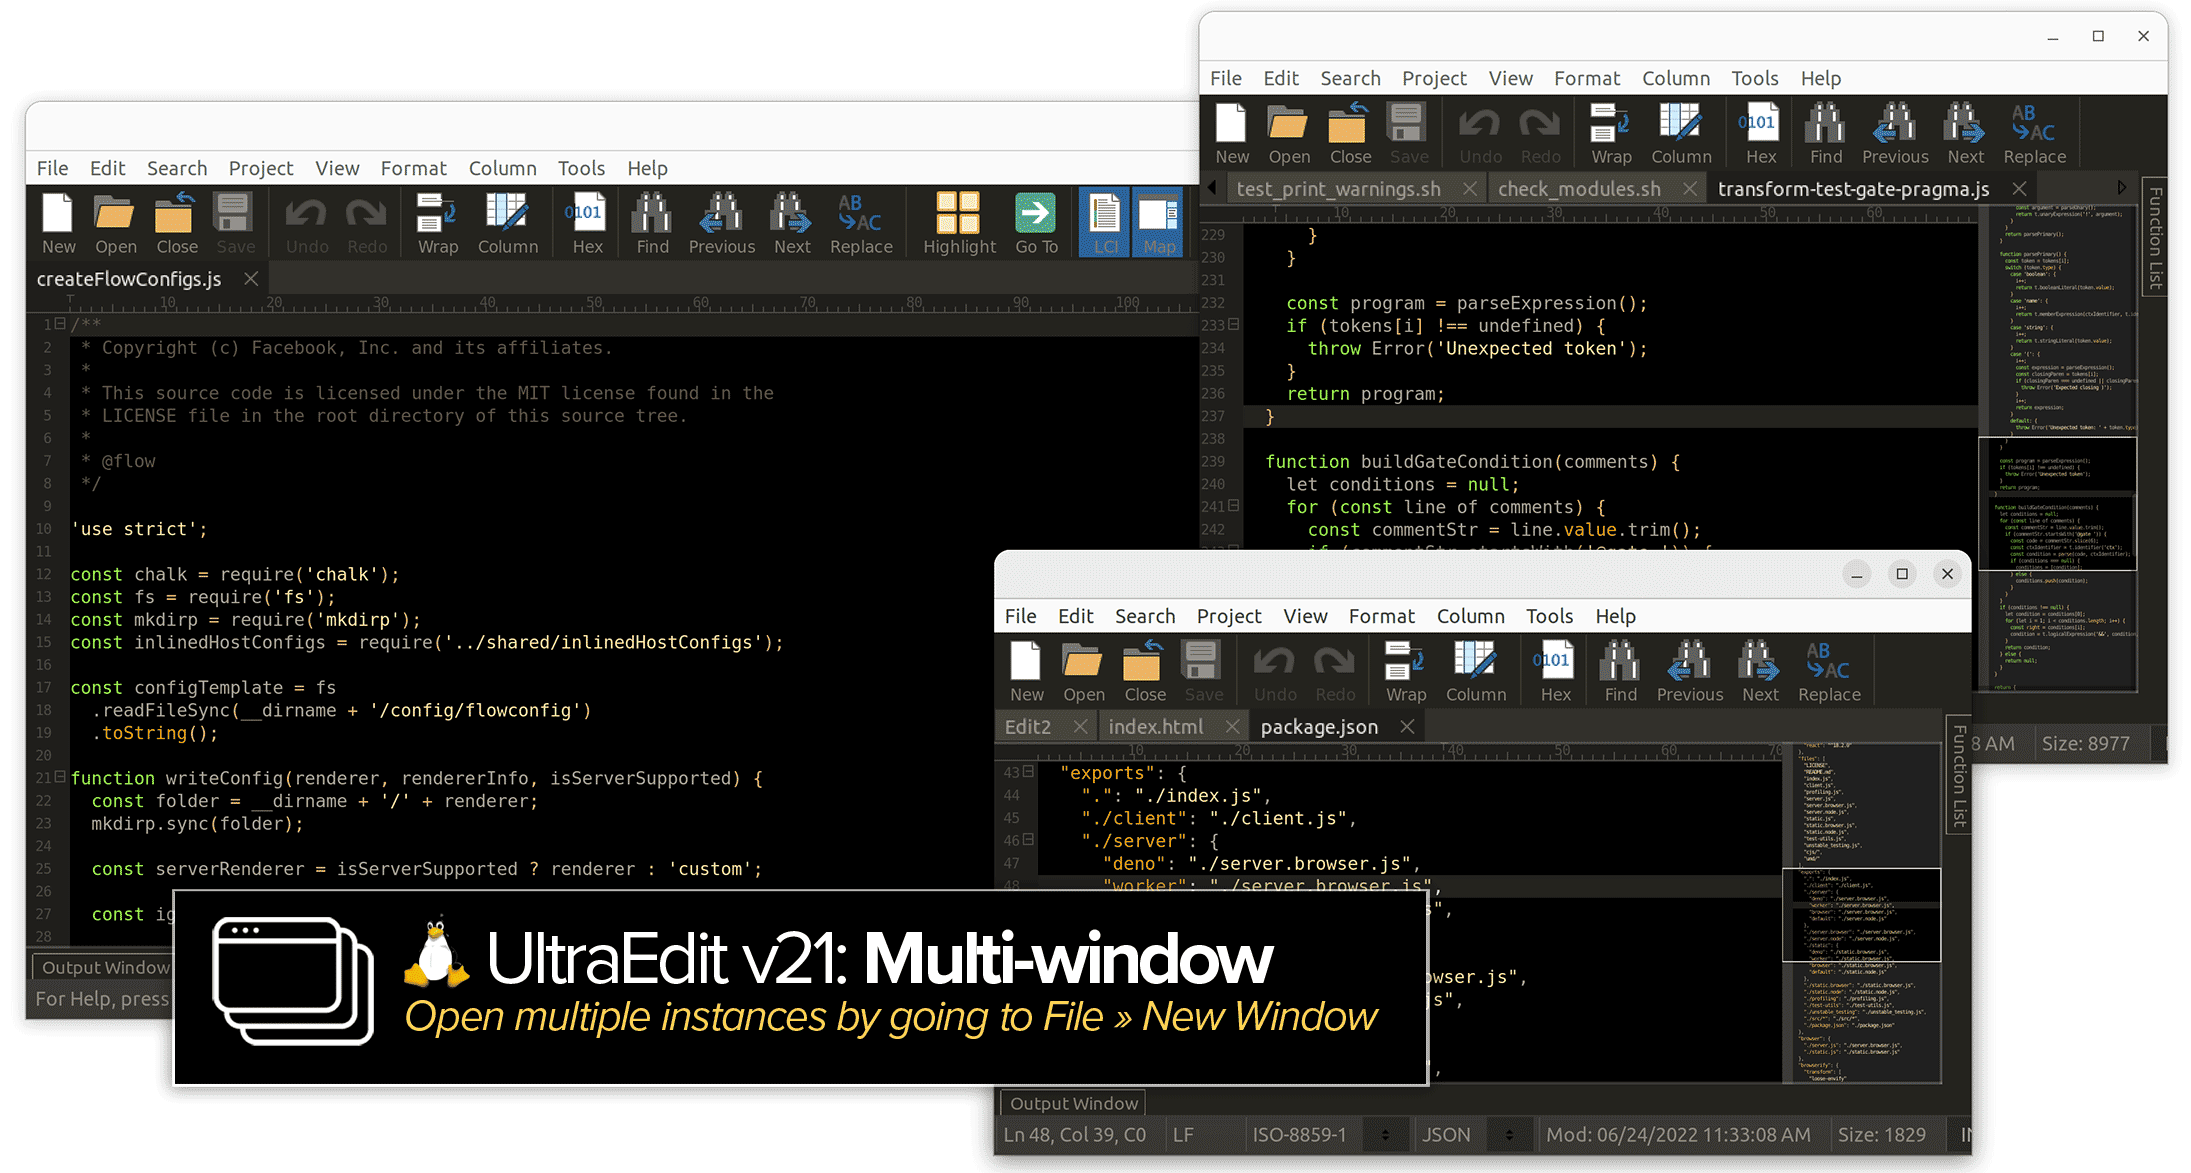 UltraEdit Mac v21 ist jetzt verfügbar